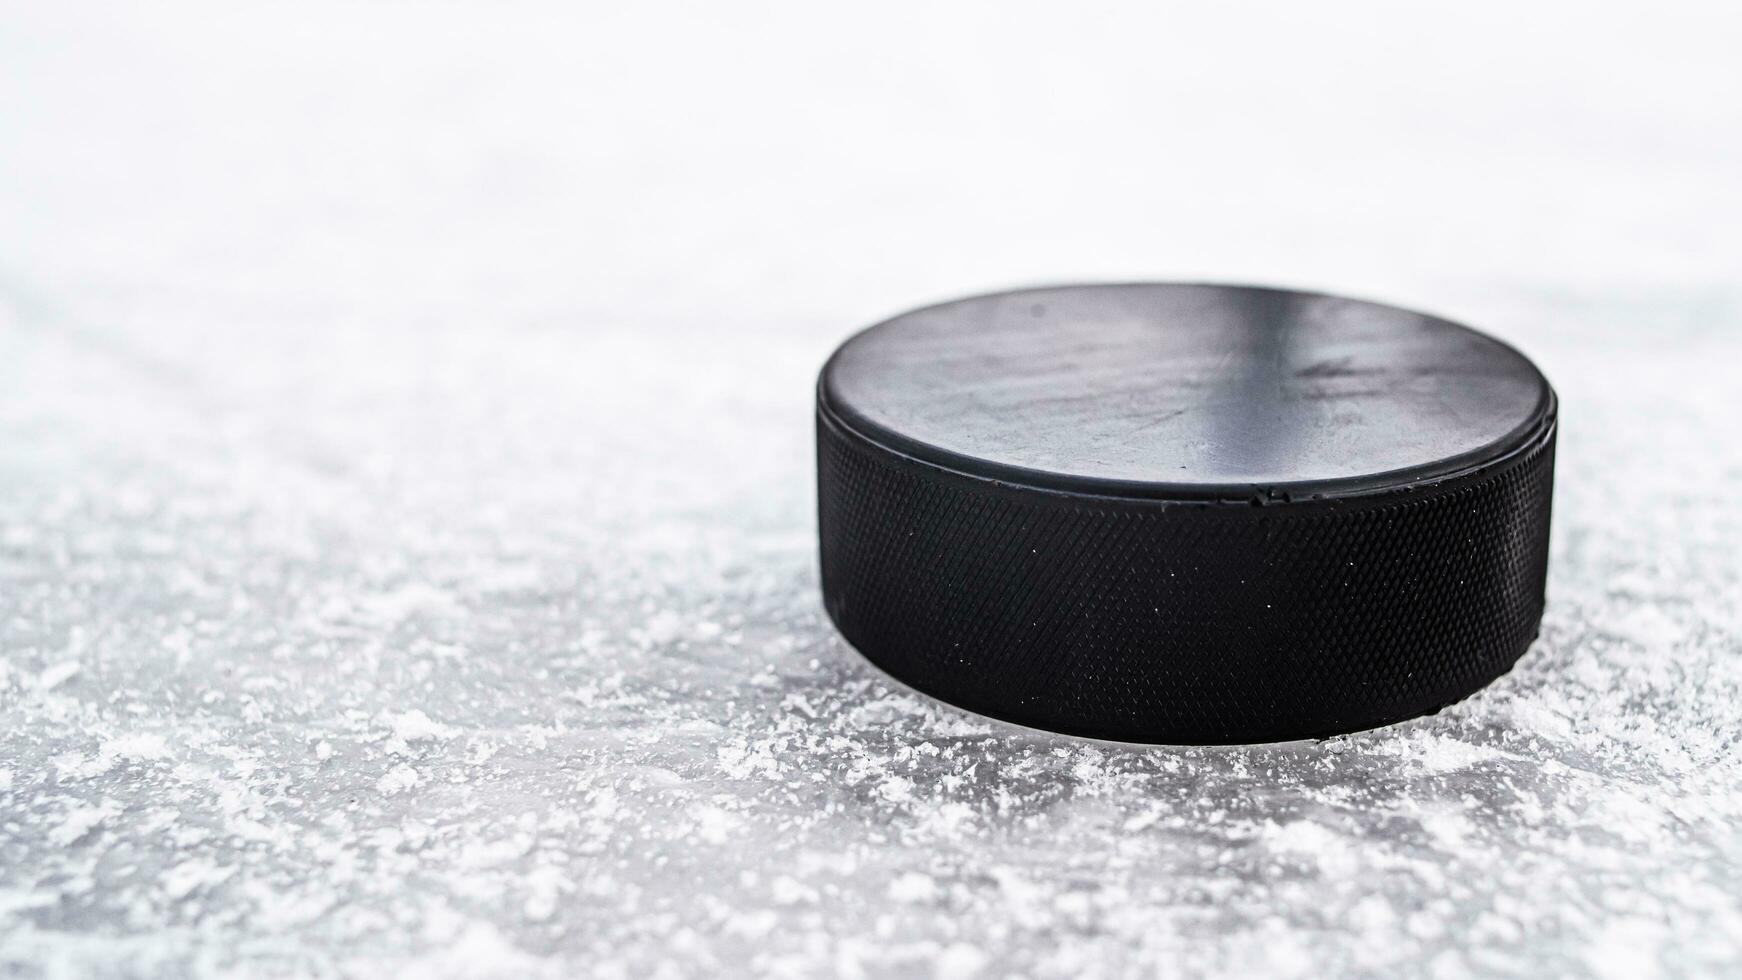 hockey puck lies on the snow macro photo